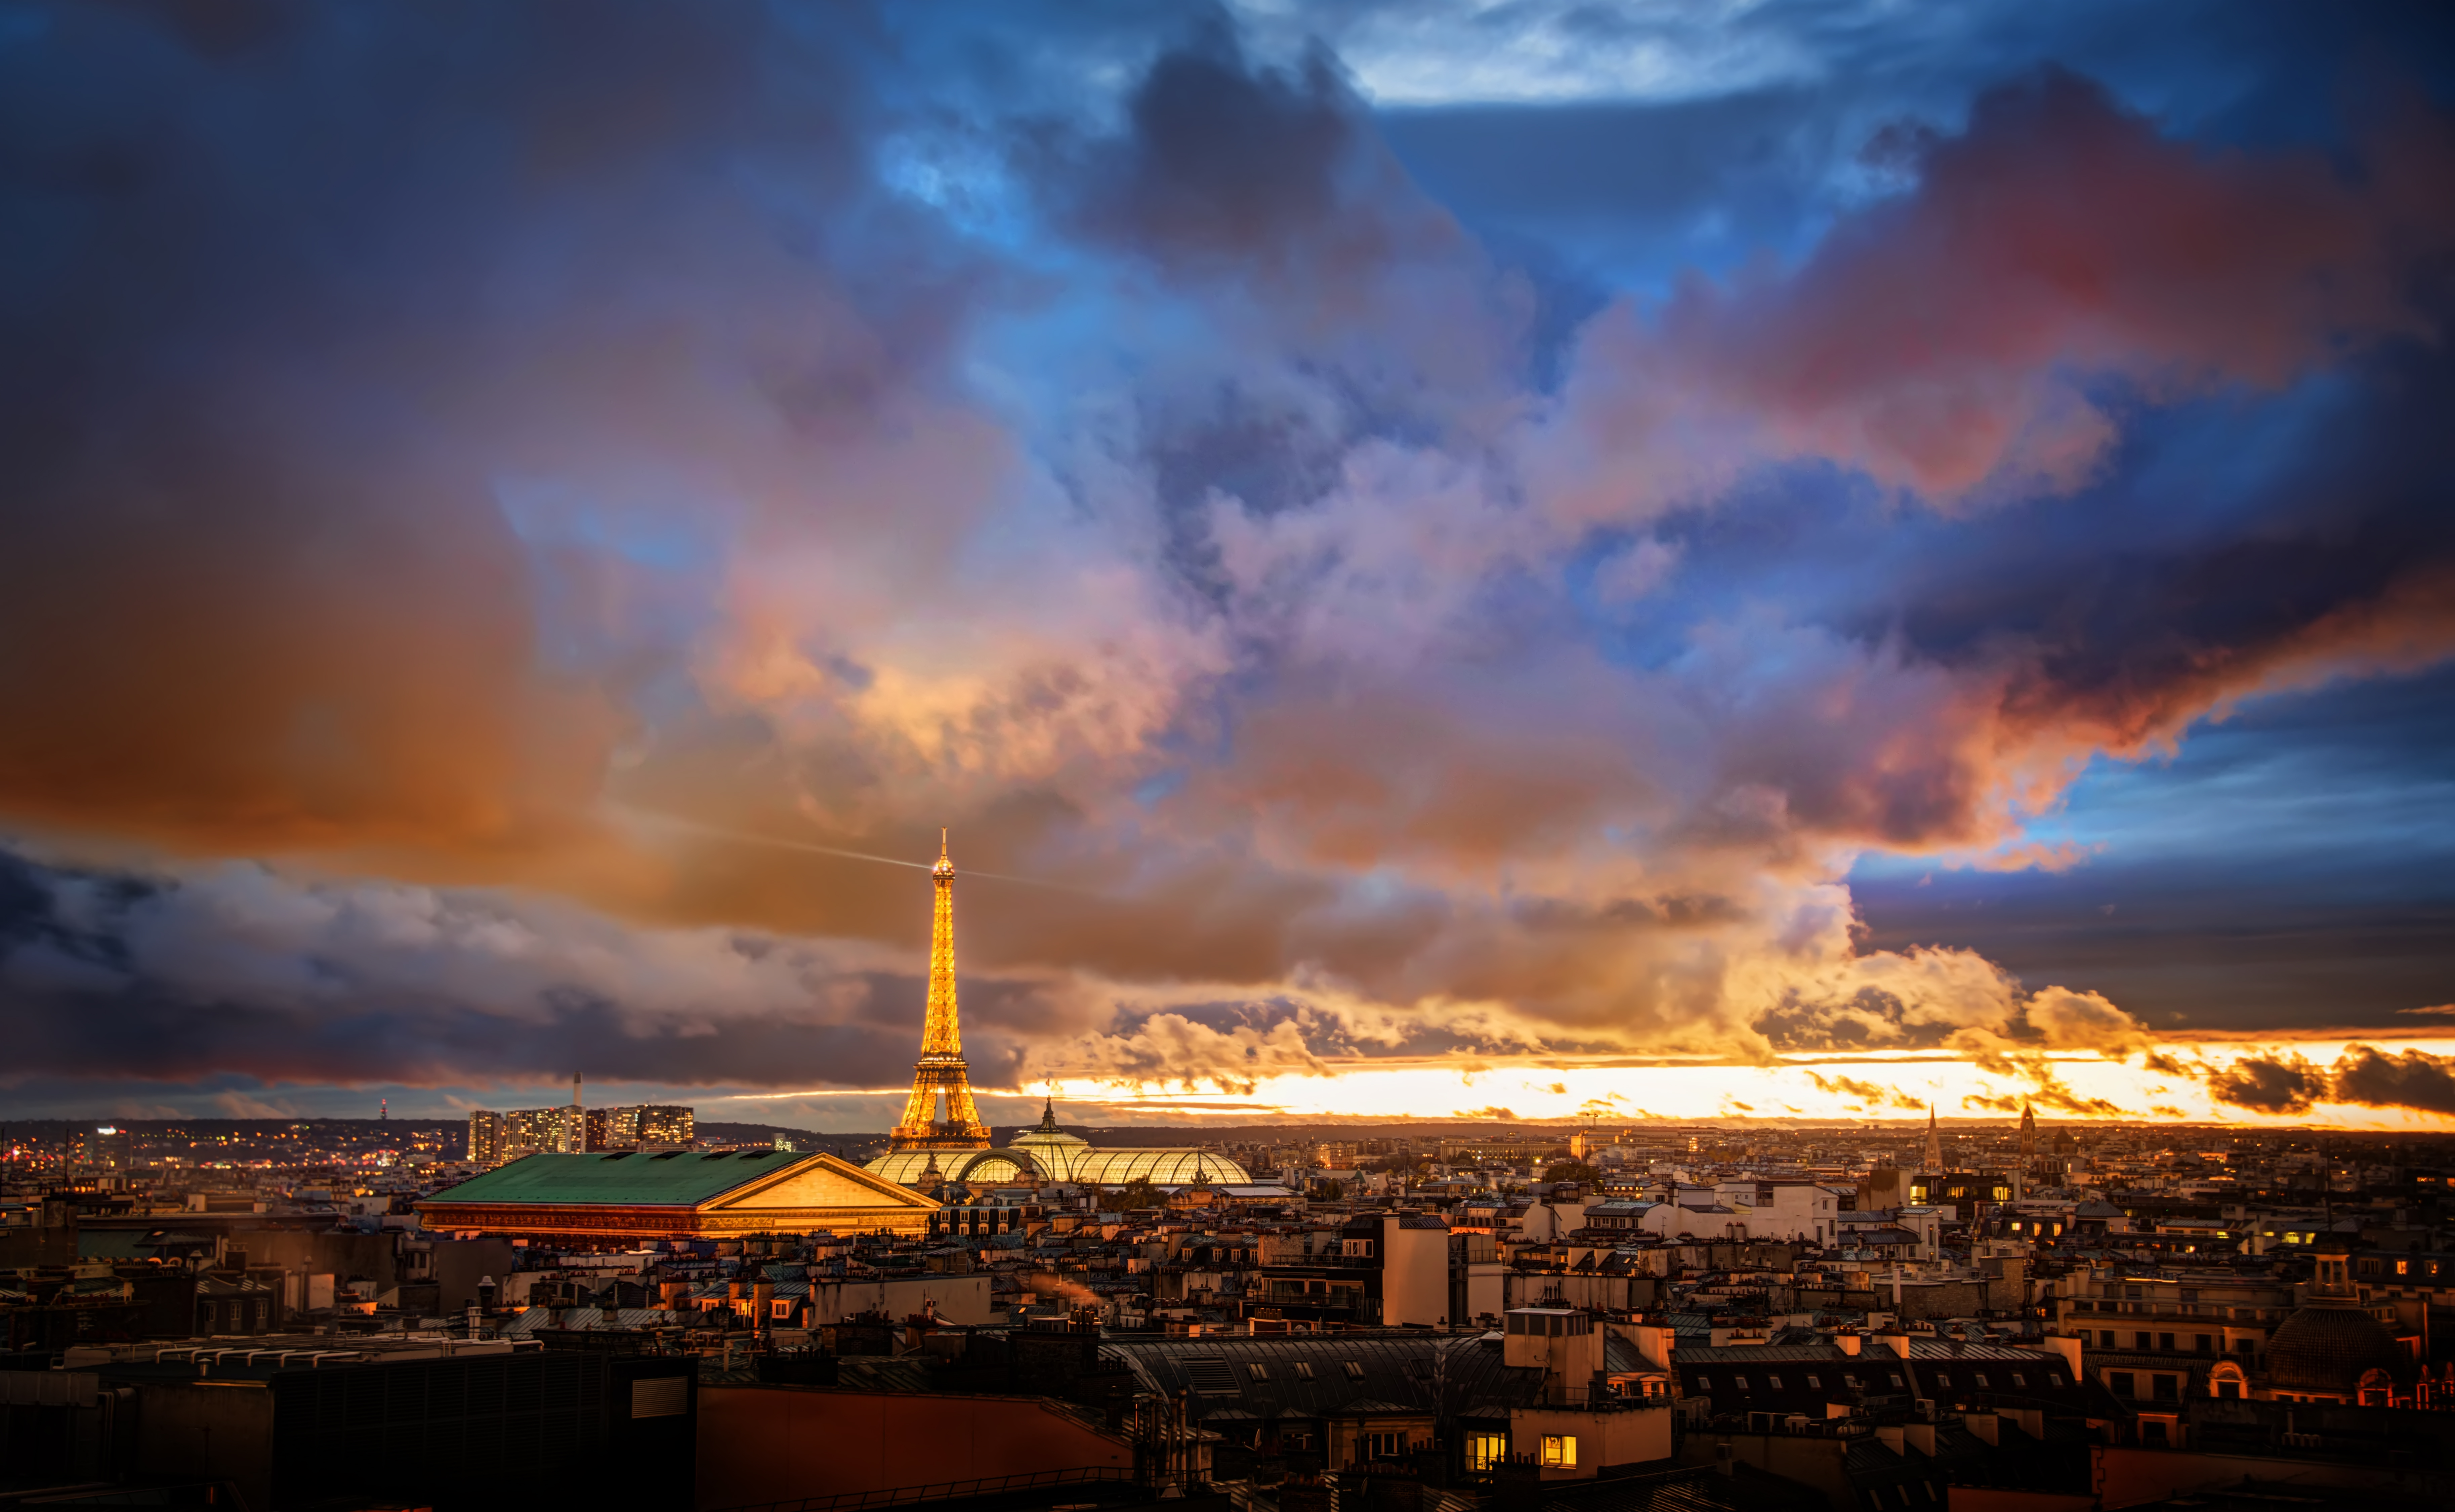 Sunset over Paris by Trey Ratcliff